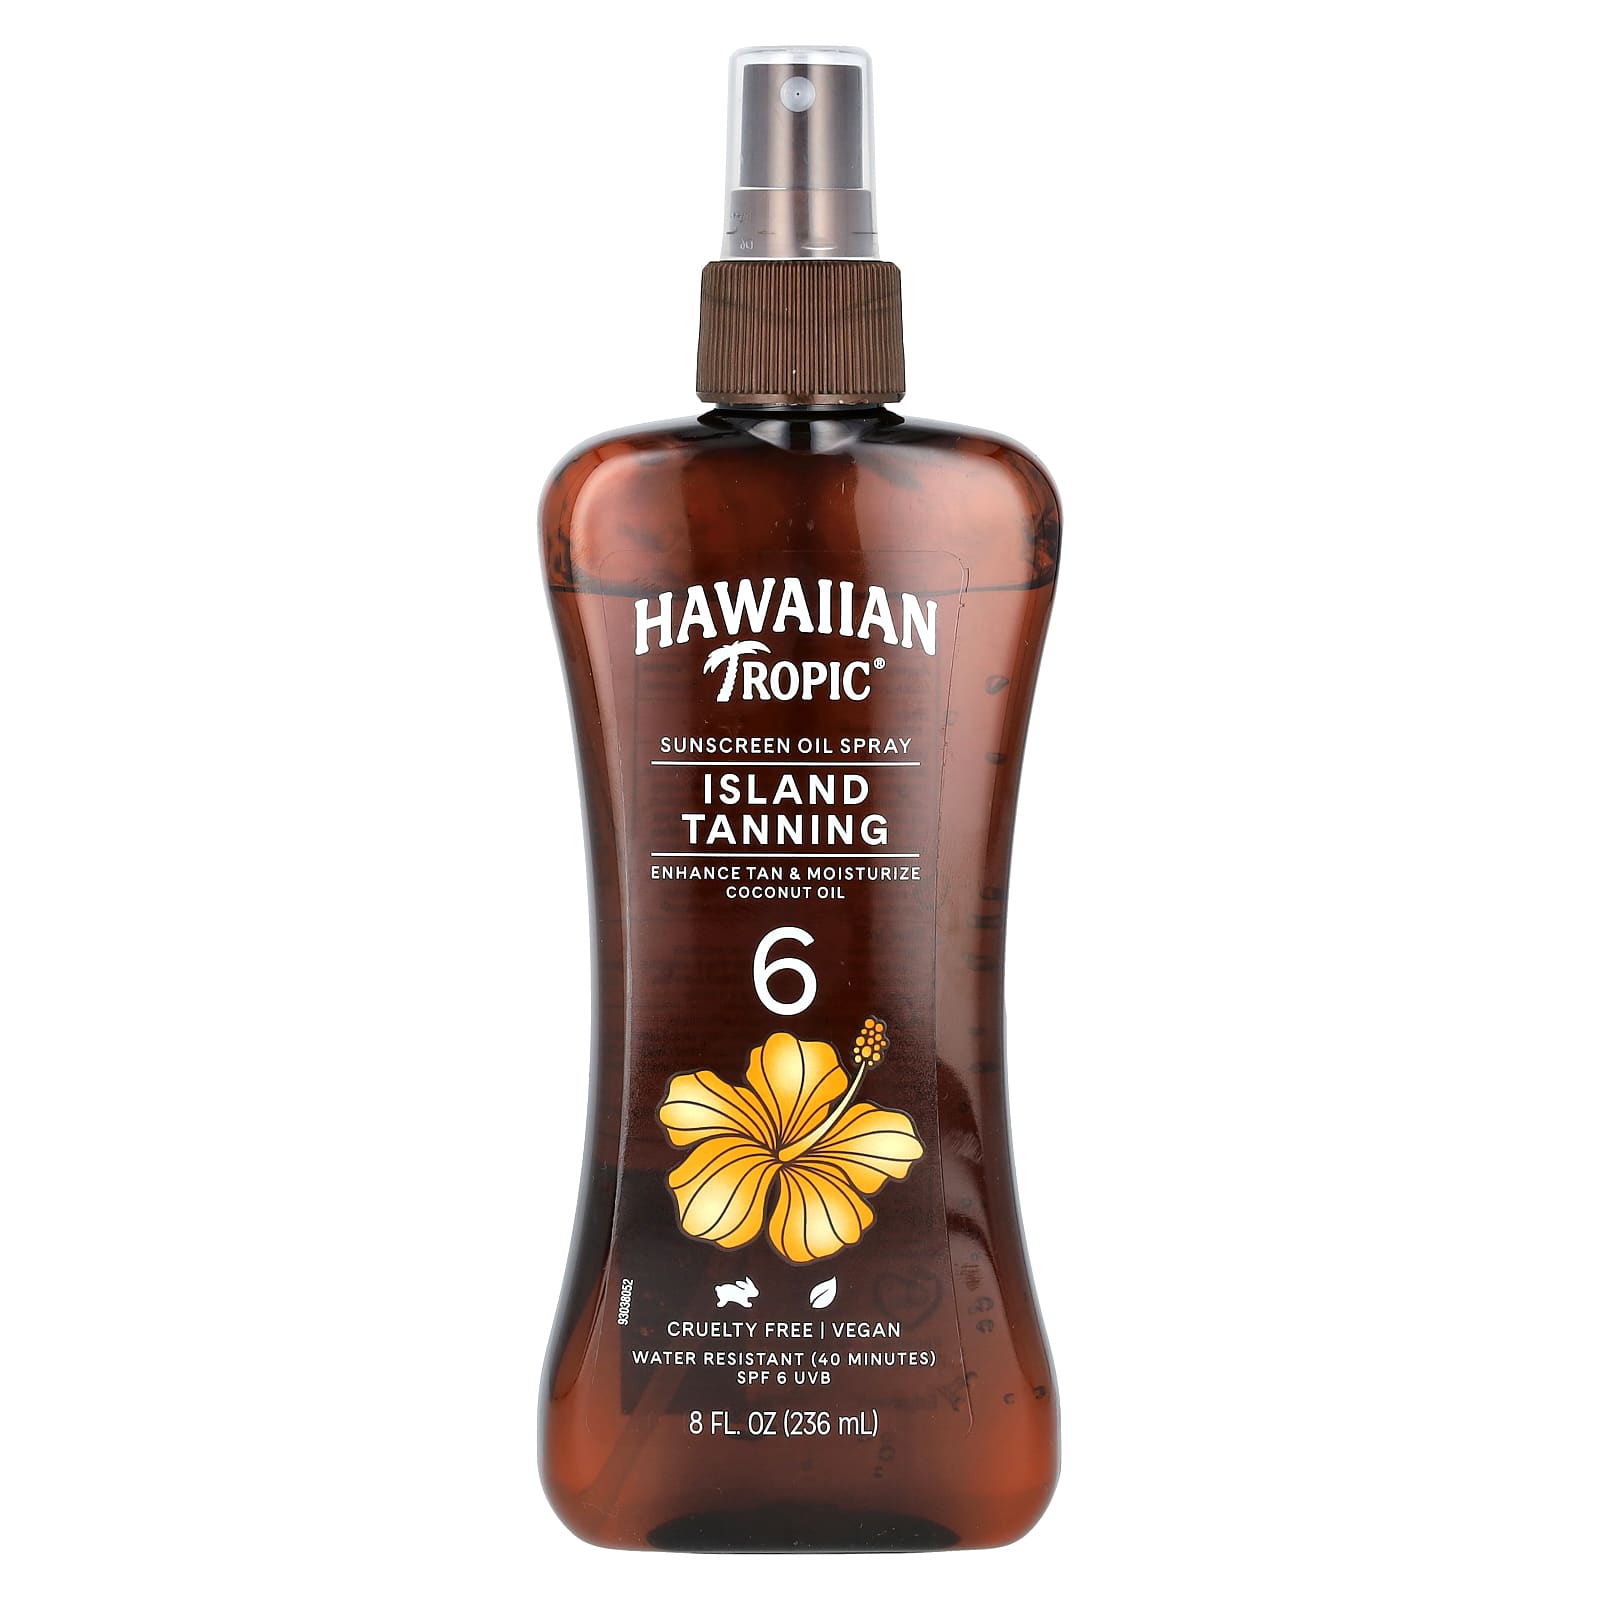 Hawaiian Tropic, Island Tanning, Sunscreen Oil Spray, SPF 6, 8 fl oz ...